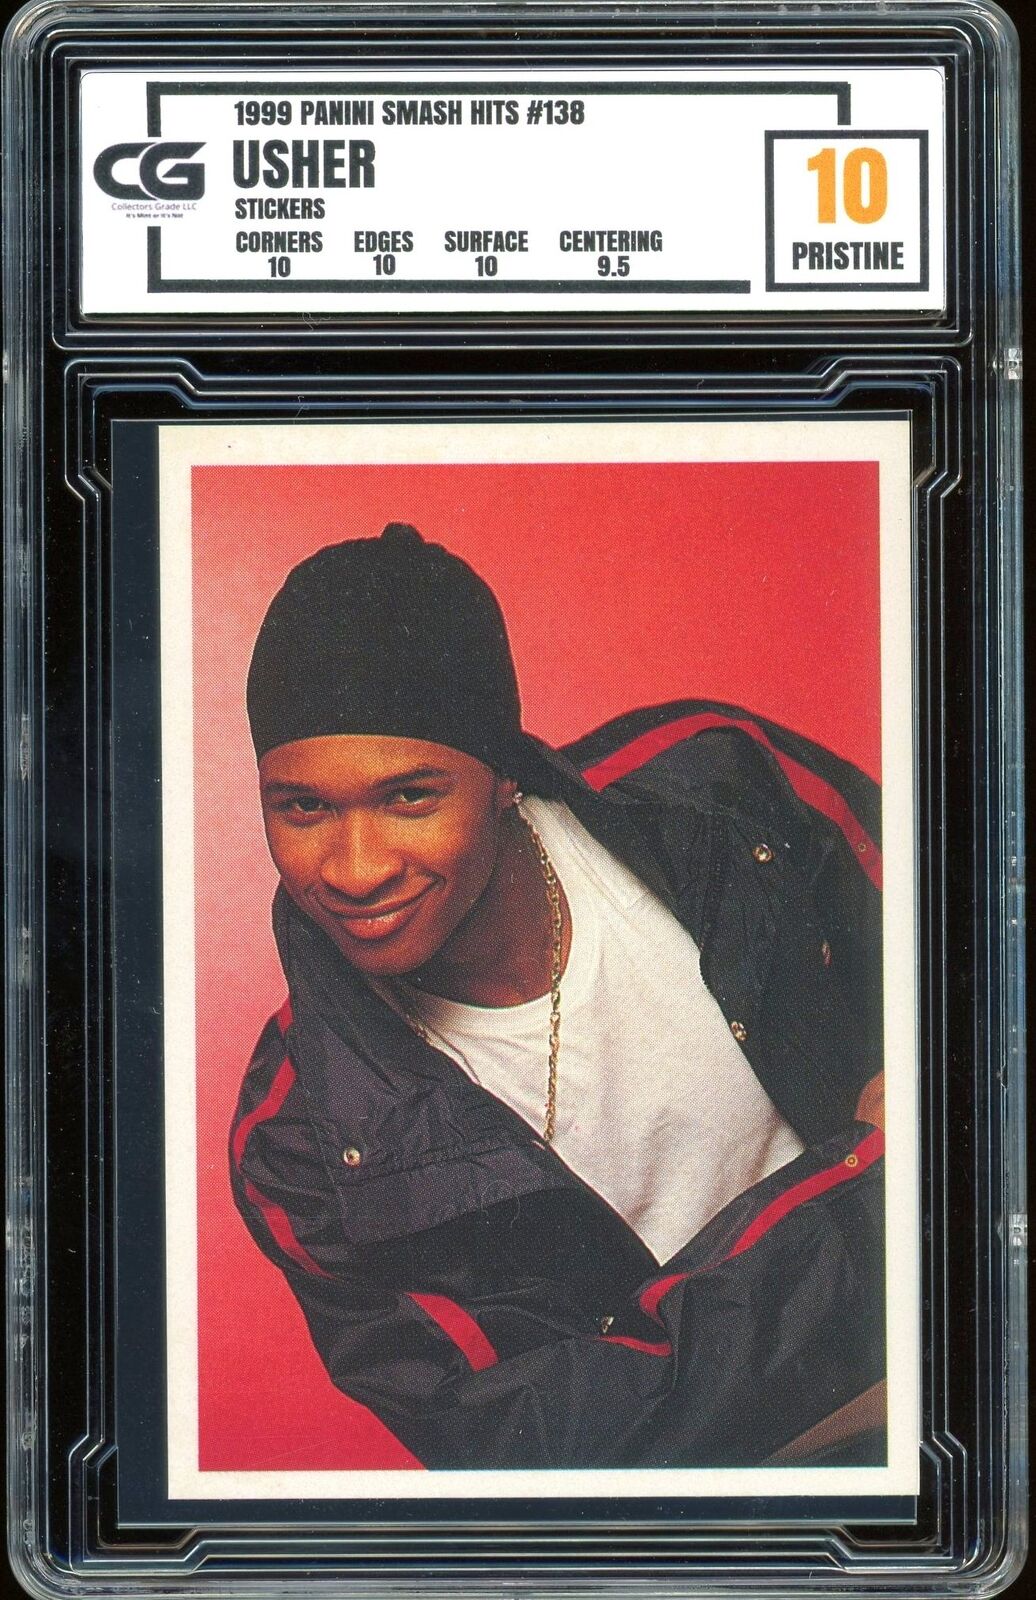 1999 Panini Smash Hits Stickers #138 ~ Usher Rookie ~ GRADED CG 10 PRISTINE